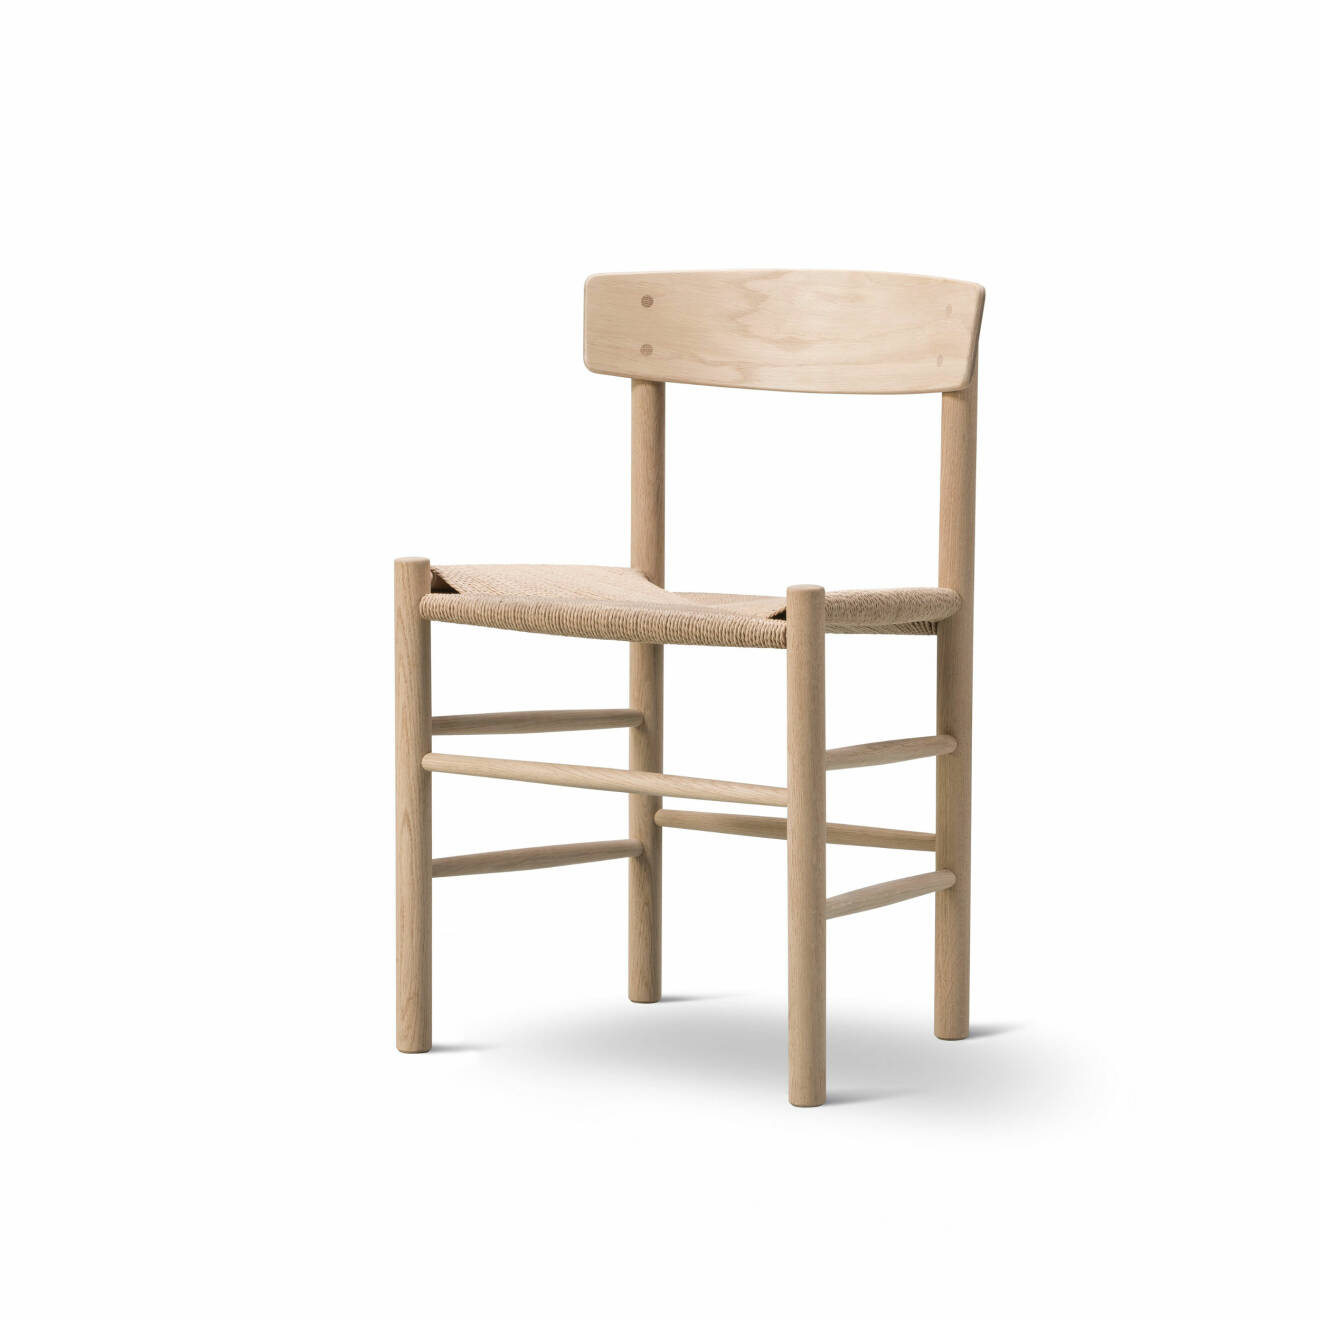 J39 chair från Fredericia Furniture